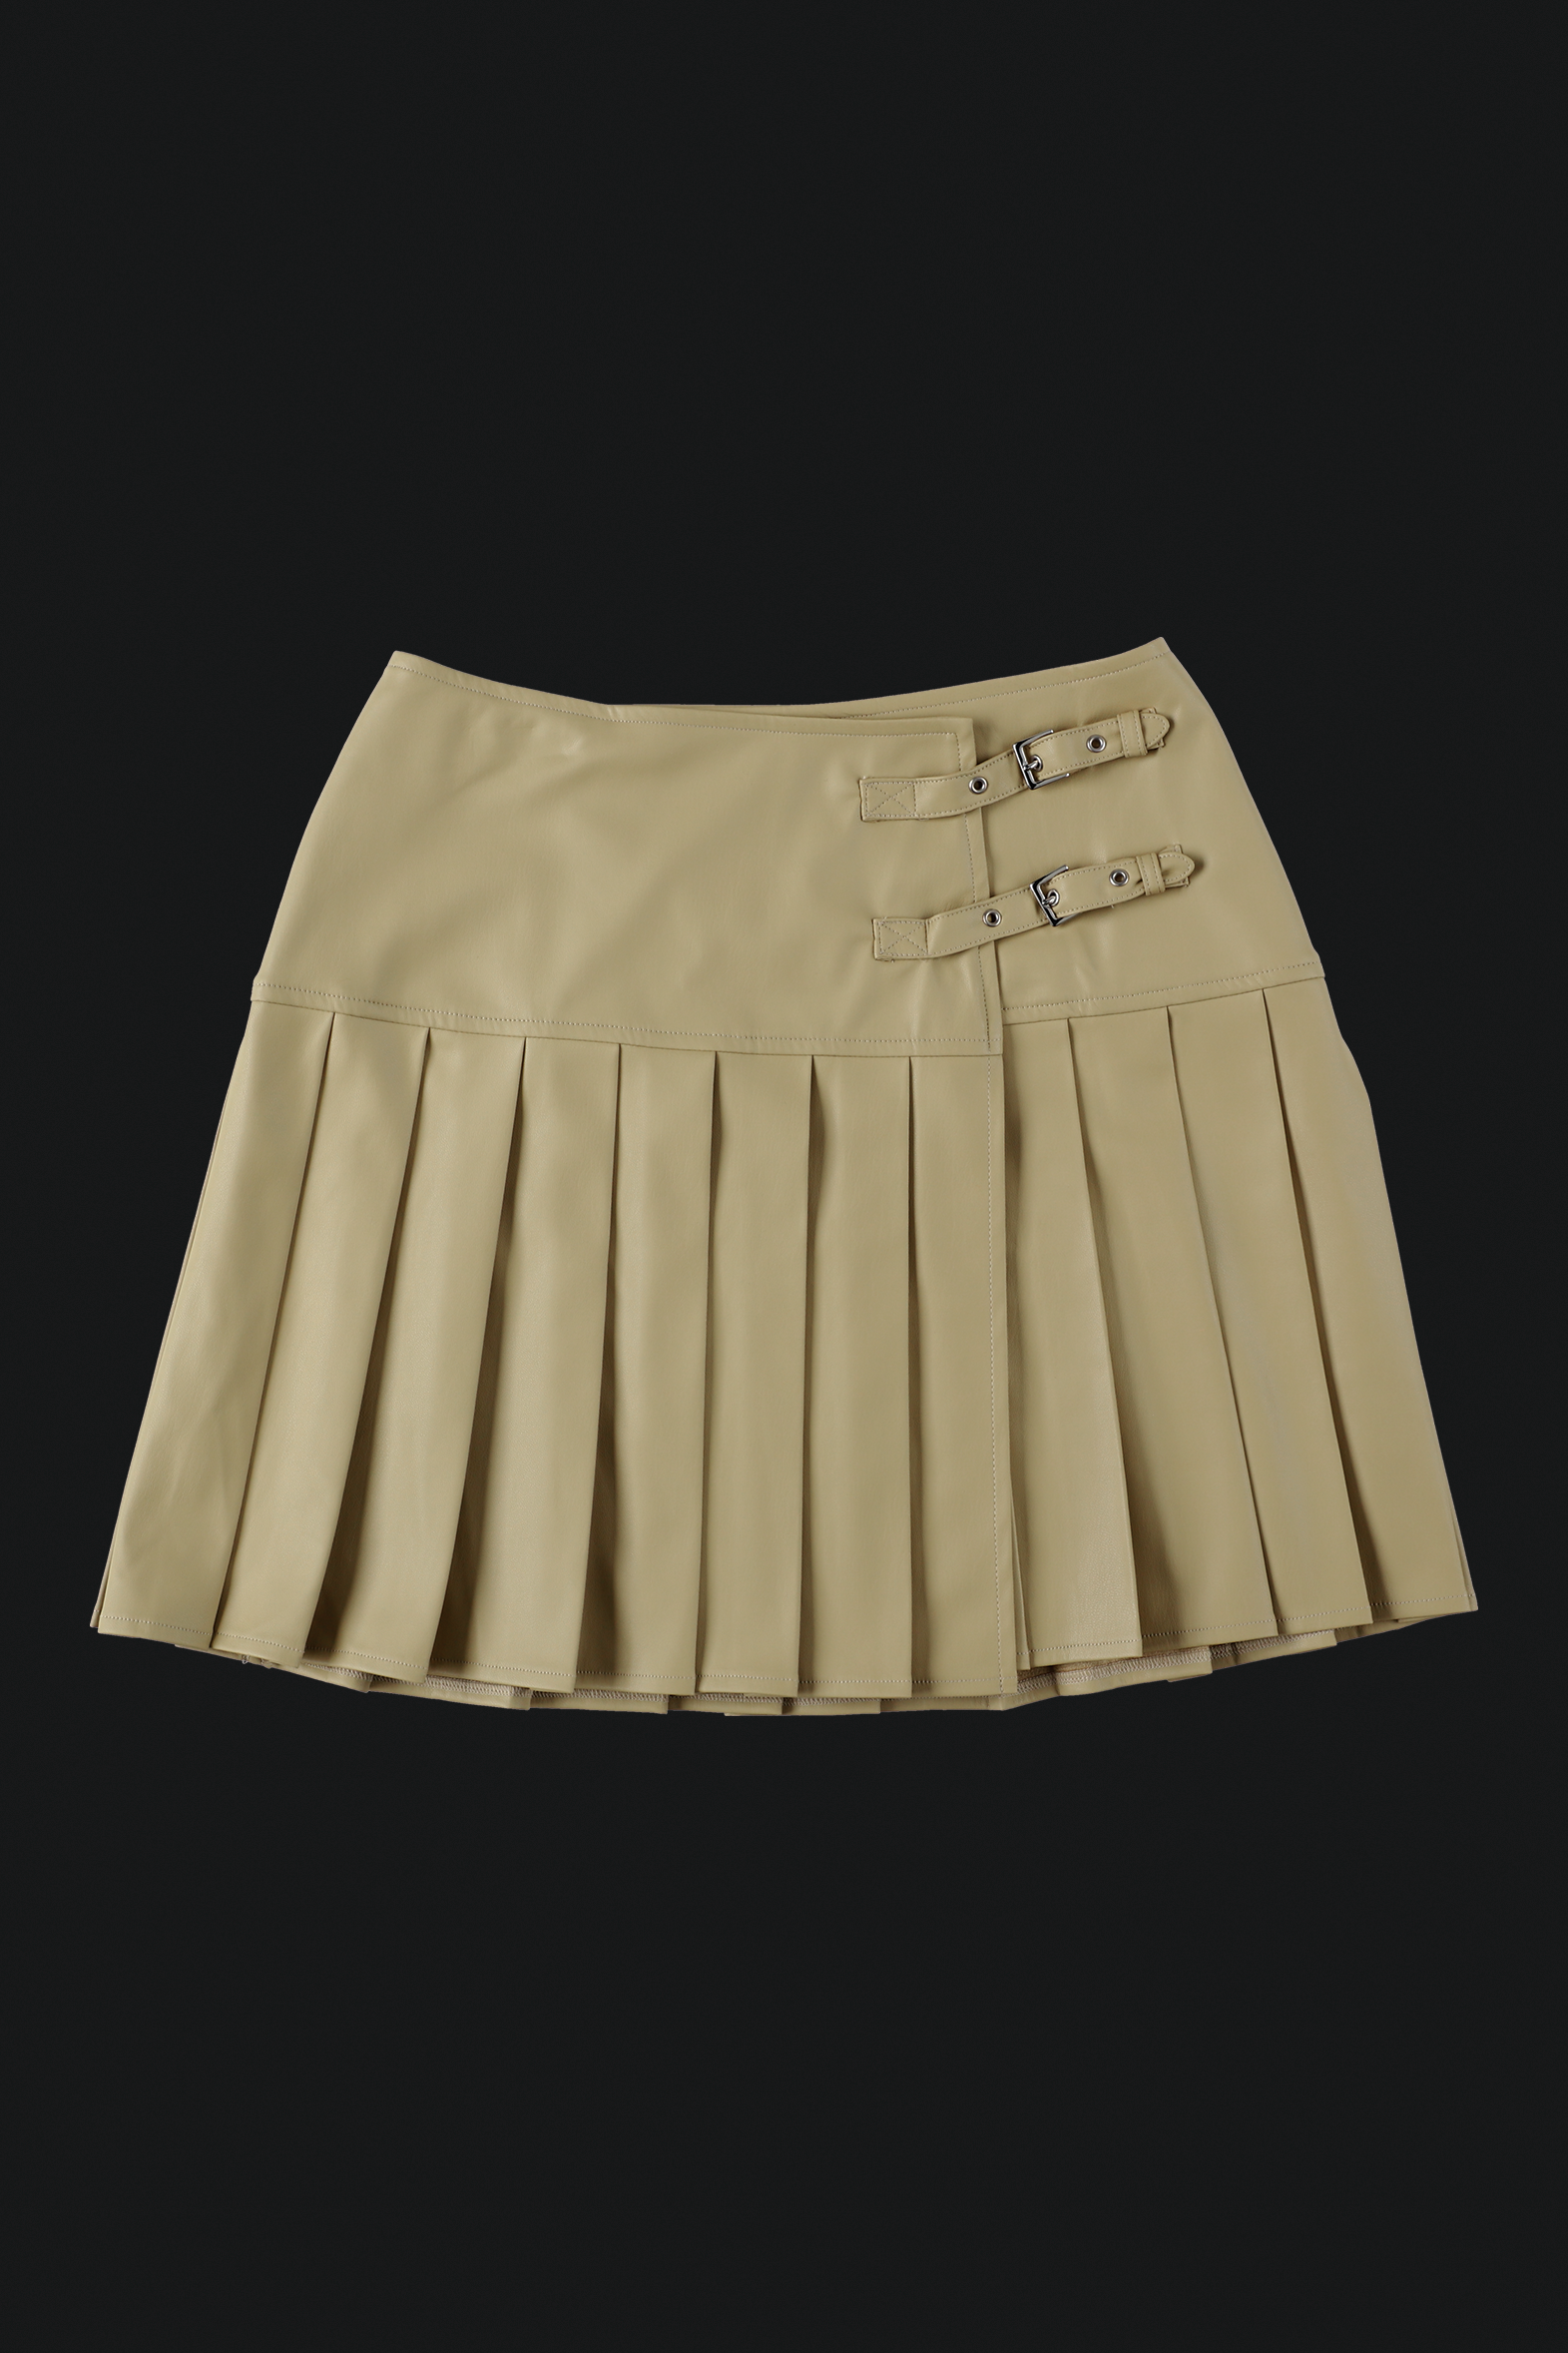 stylish pleated skirt (스타일리쉬 플리츠 스커트)